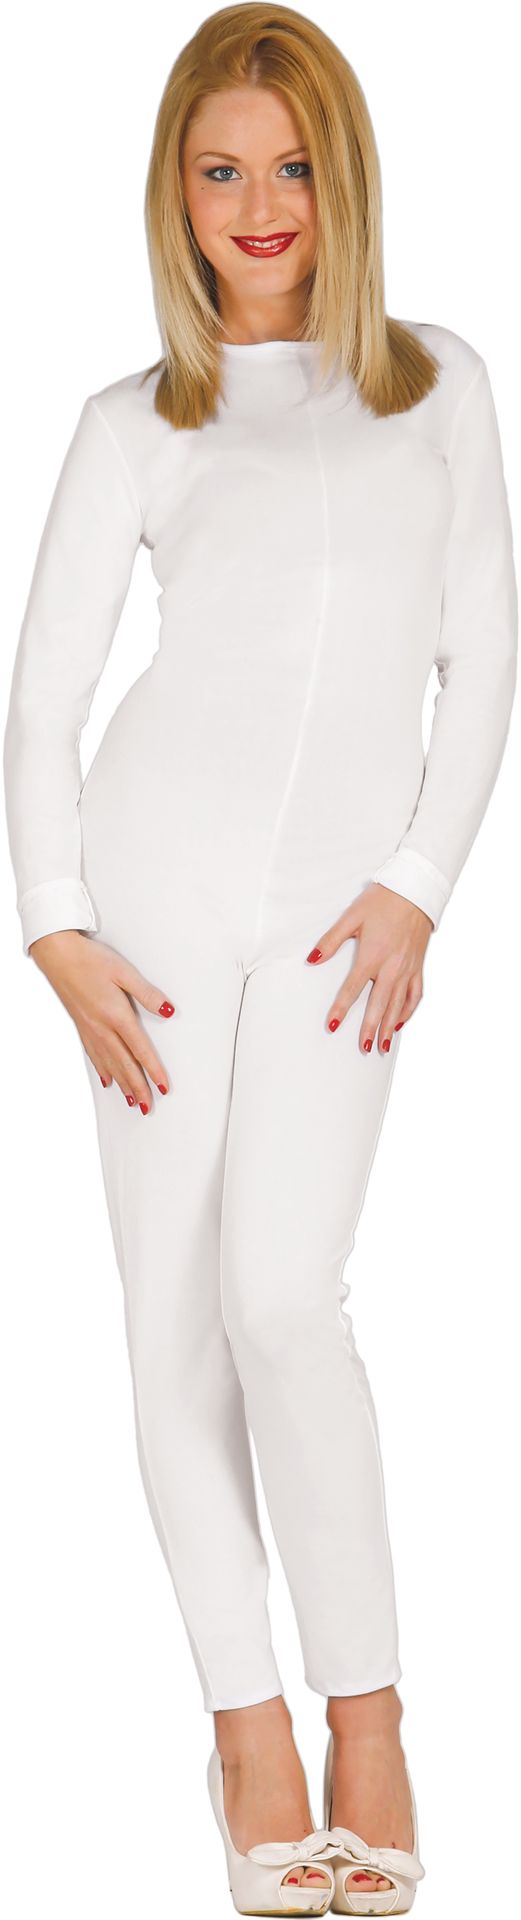 Witte dames bodysuit